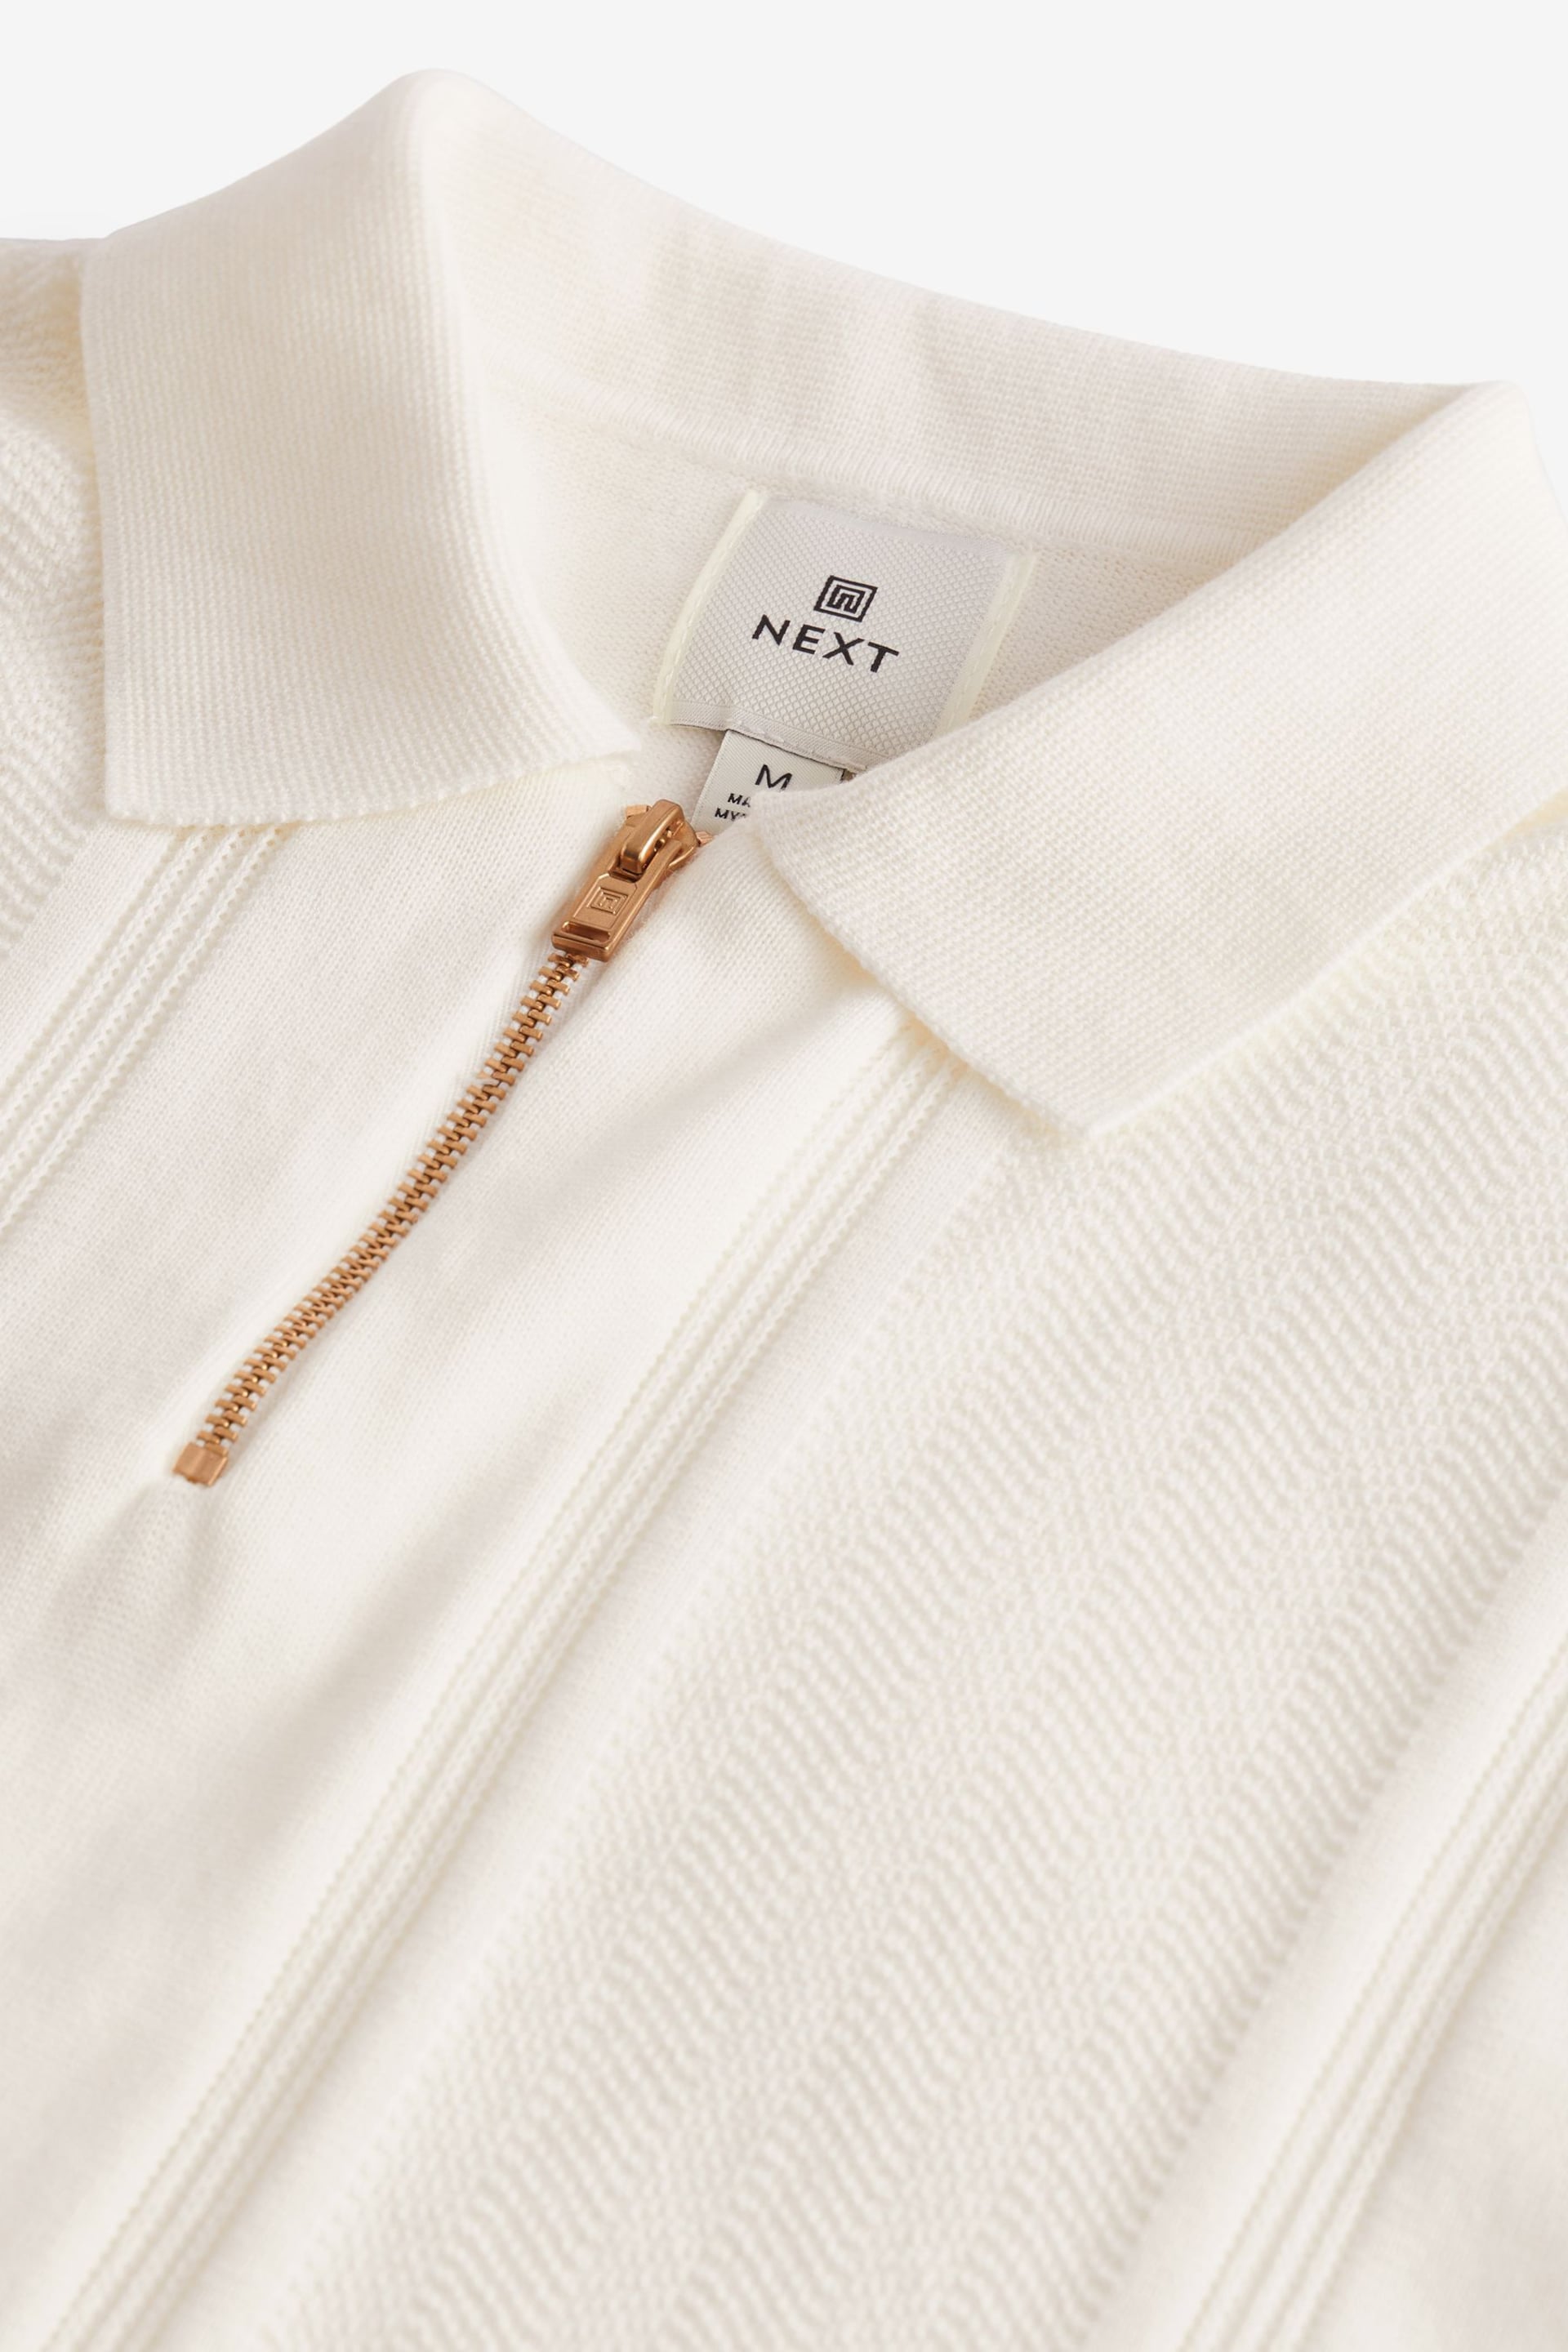 White Regular Textured Stripe Knit Polo Shirt - Image 2 of 3